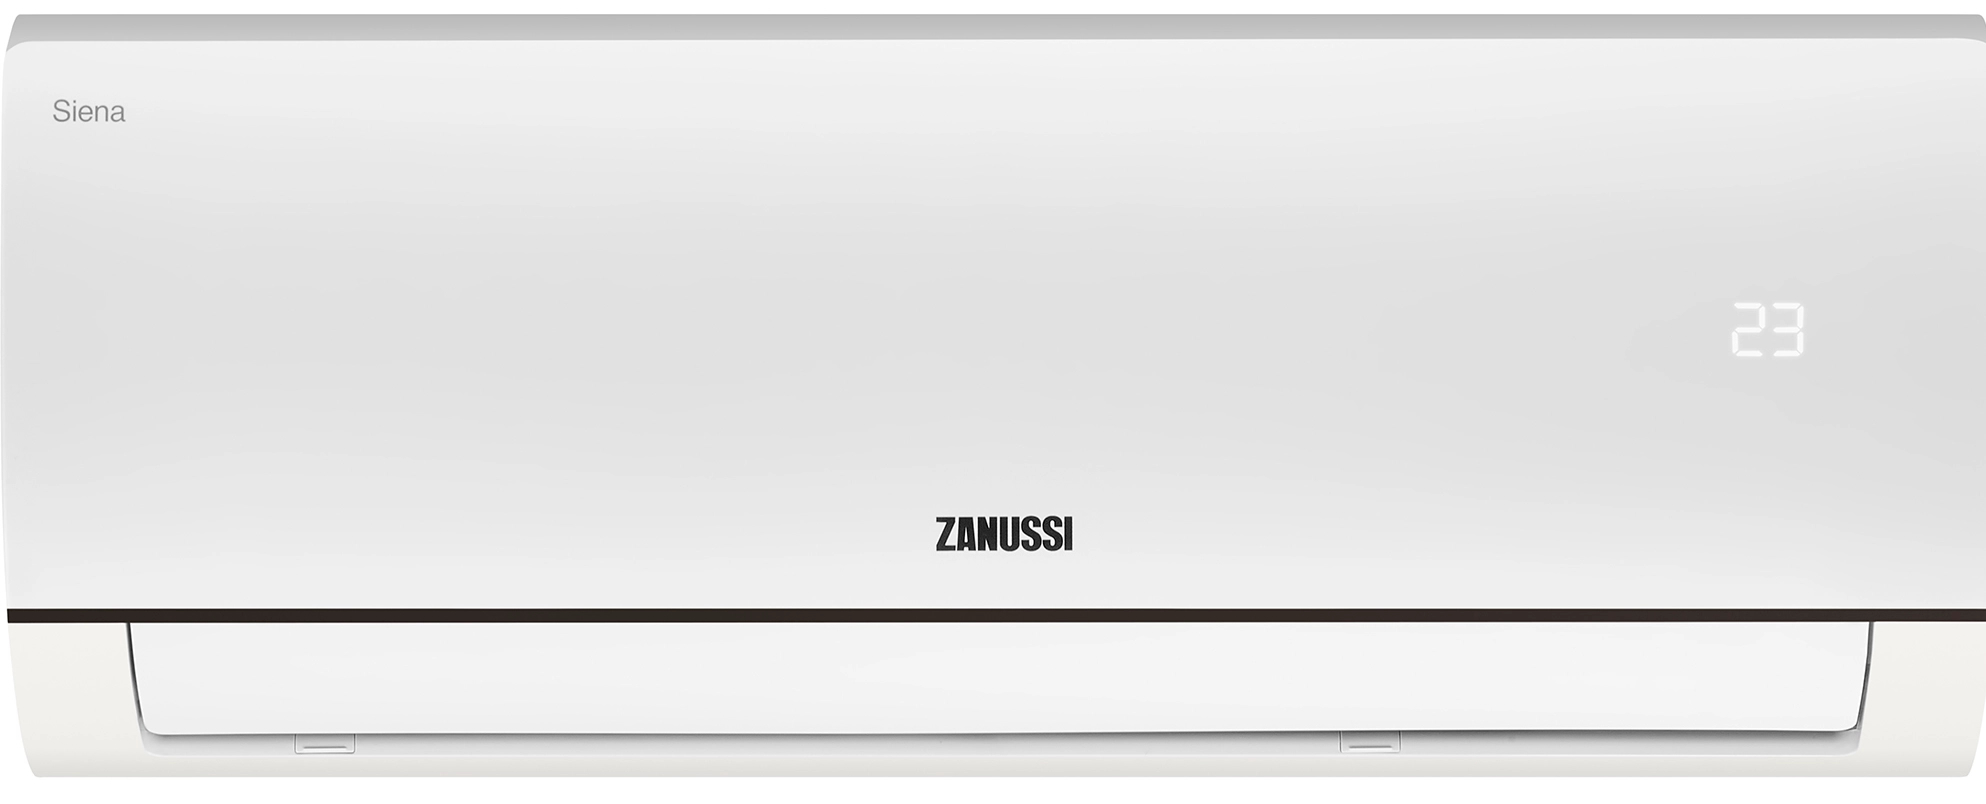 продаём Zanussi Siena ZACS-24 HS/A21/N1 в Украине - фото 4